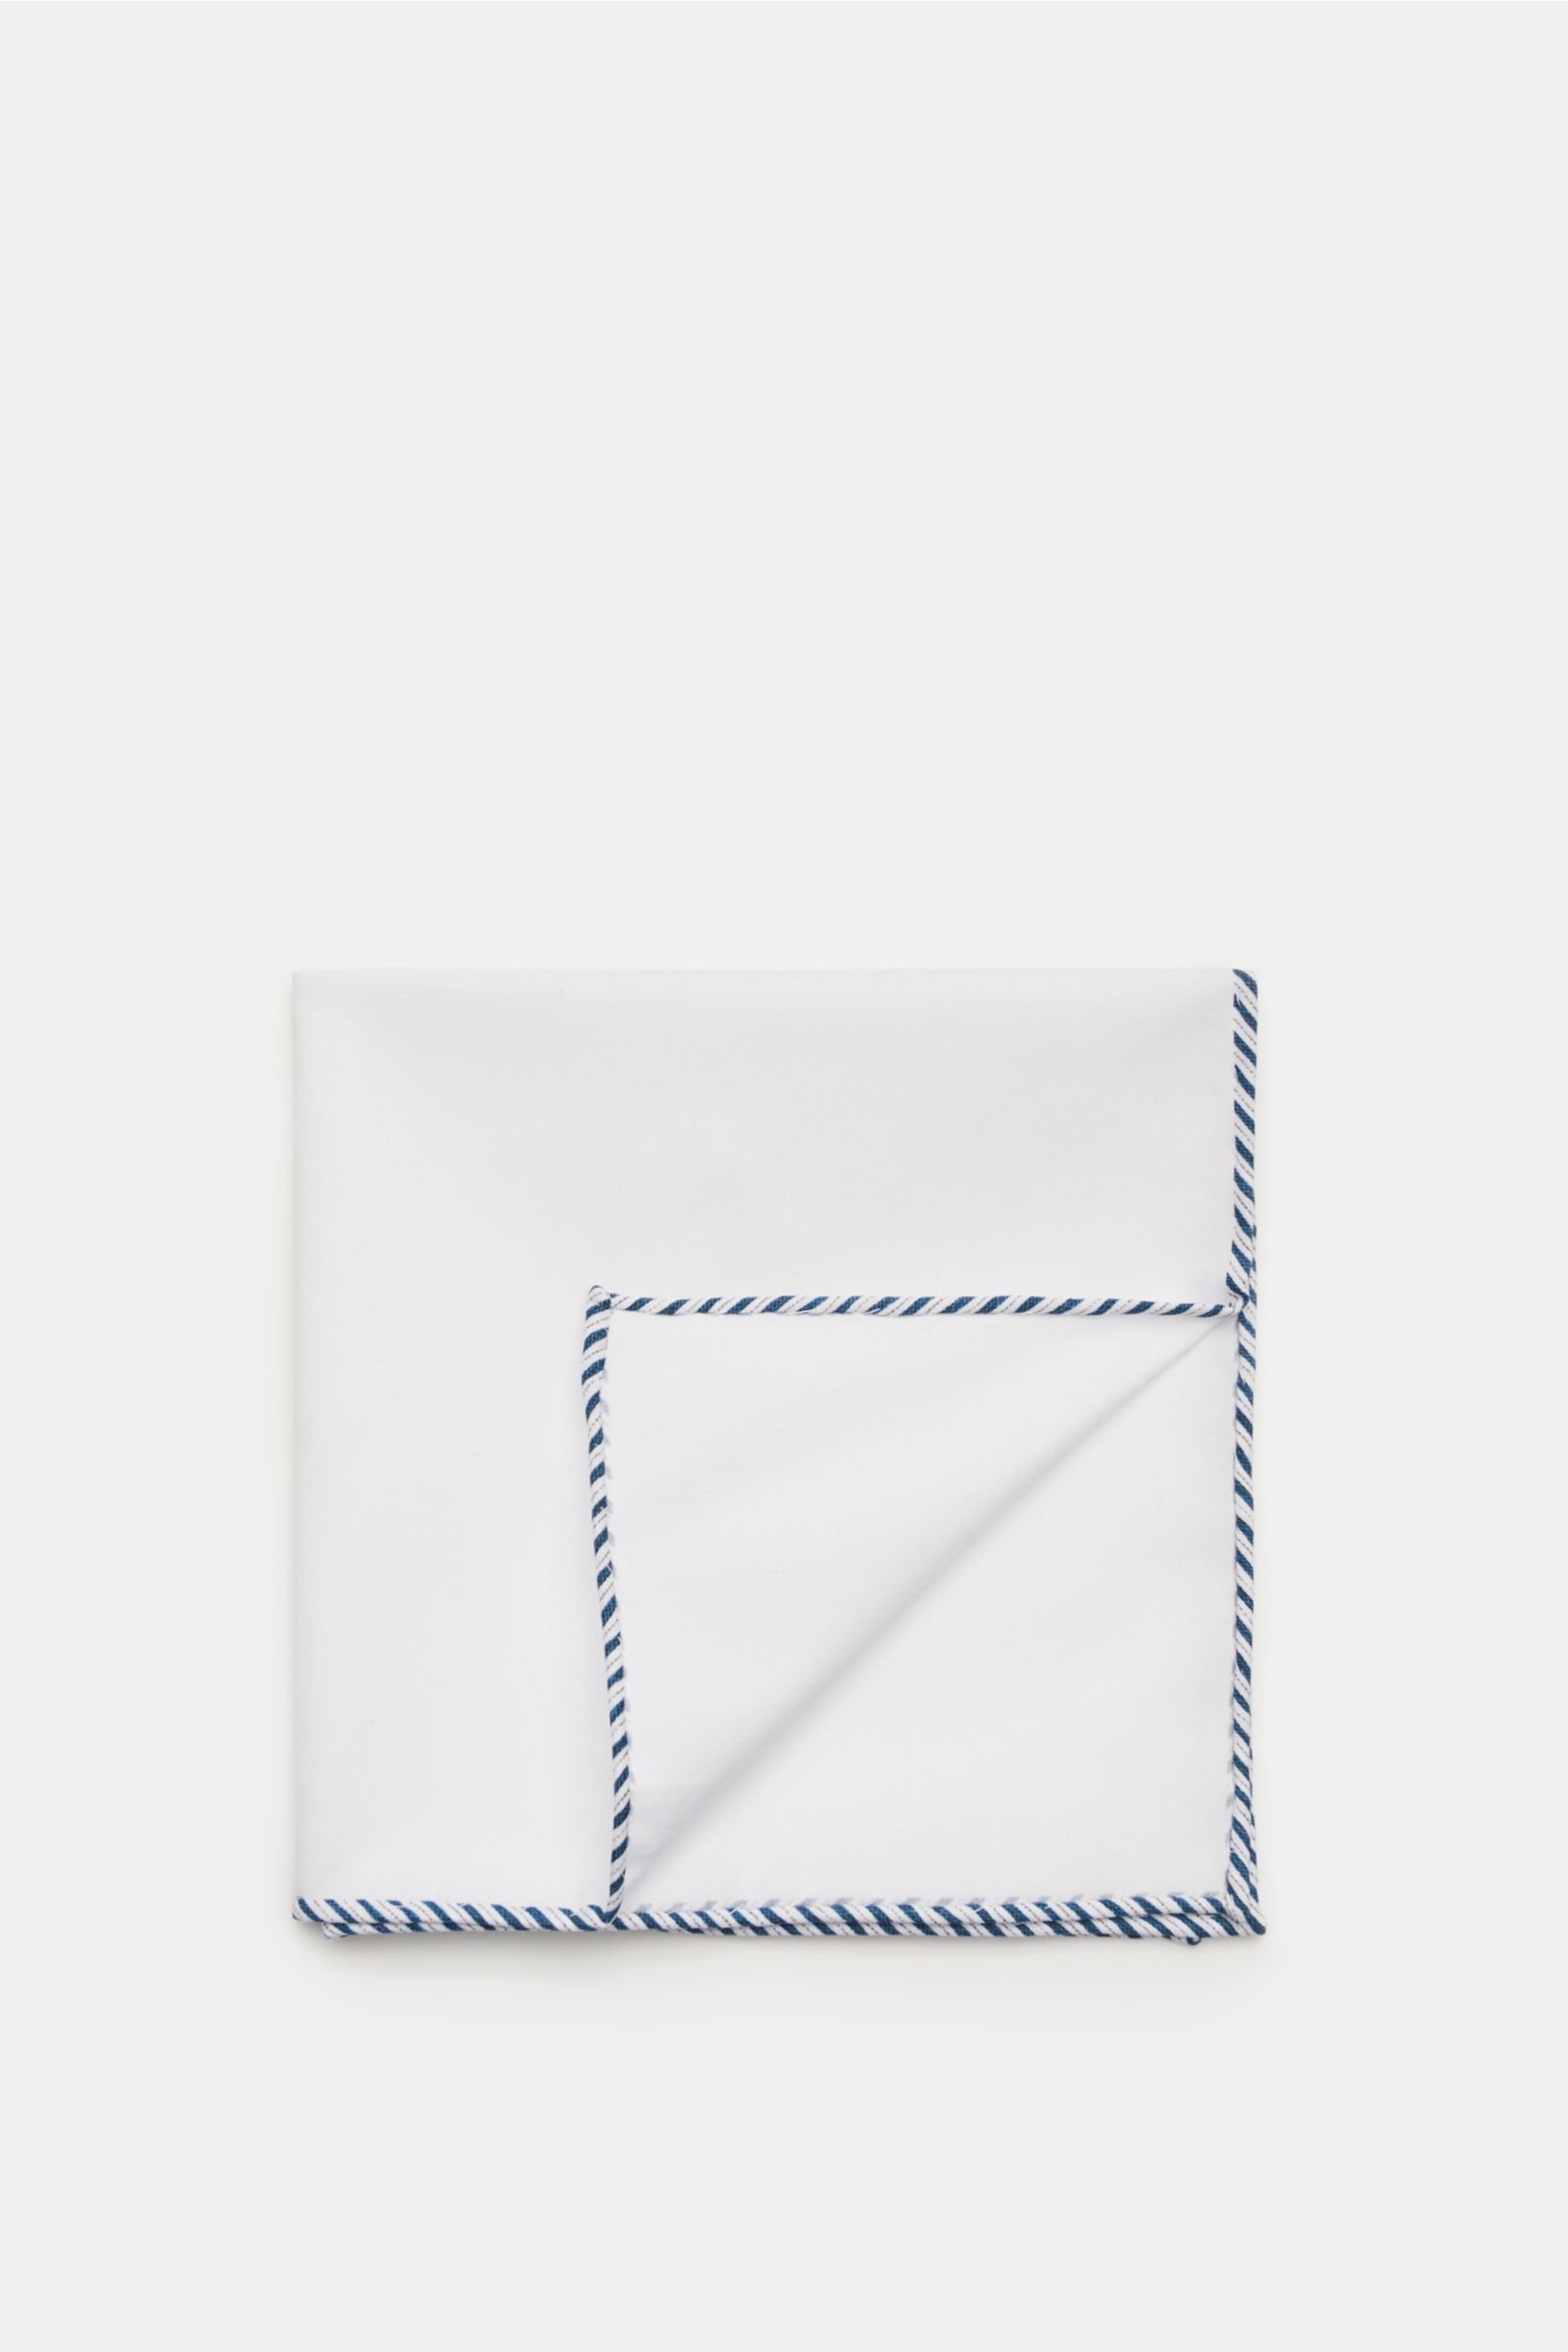 Pocket square white/navy